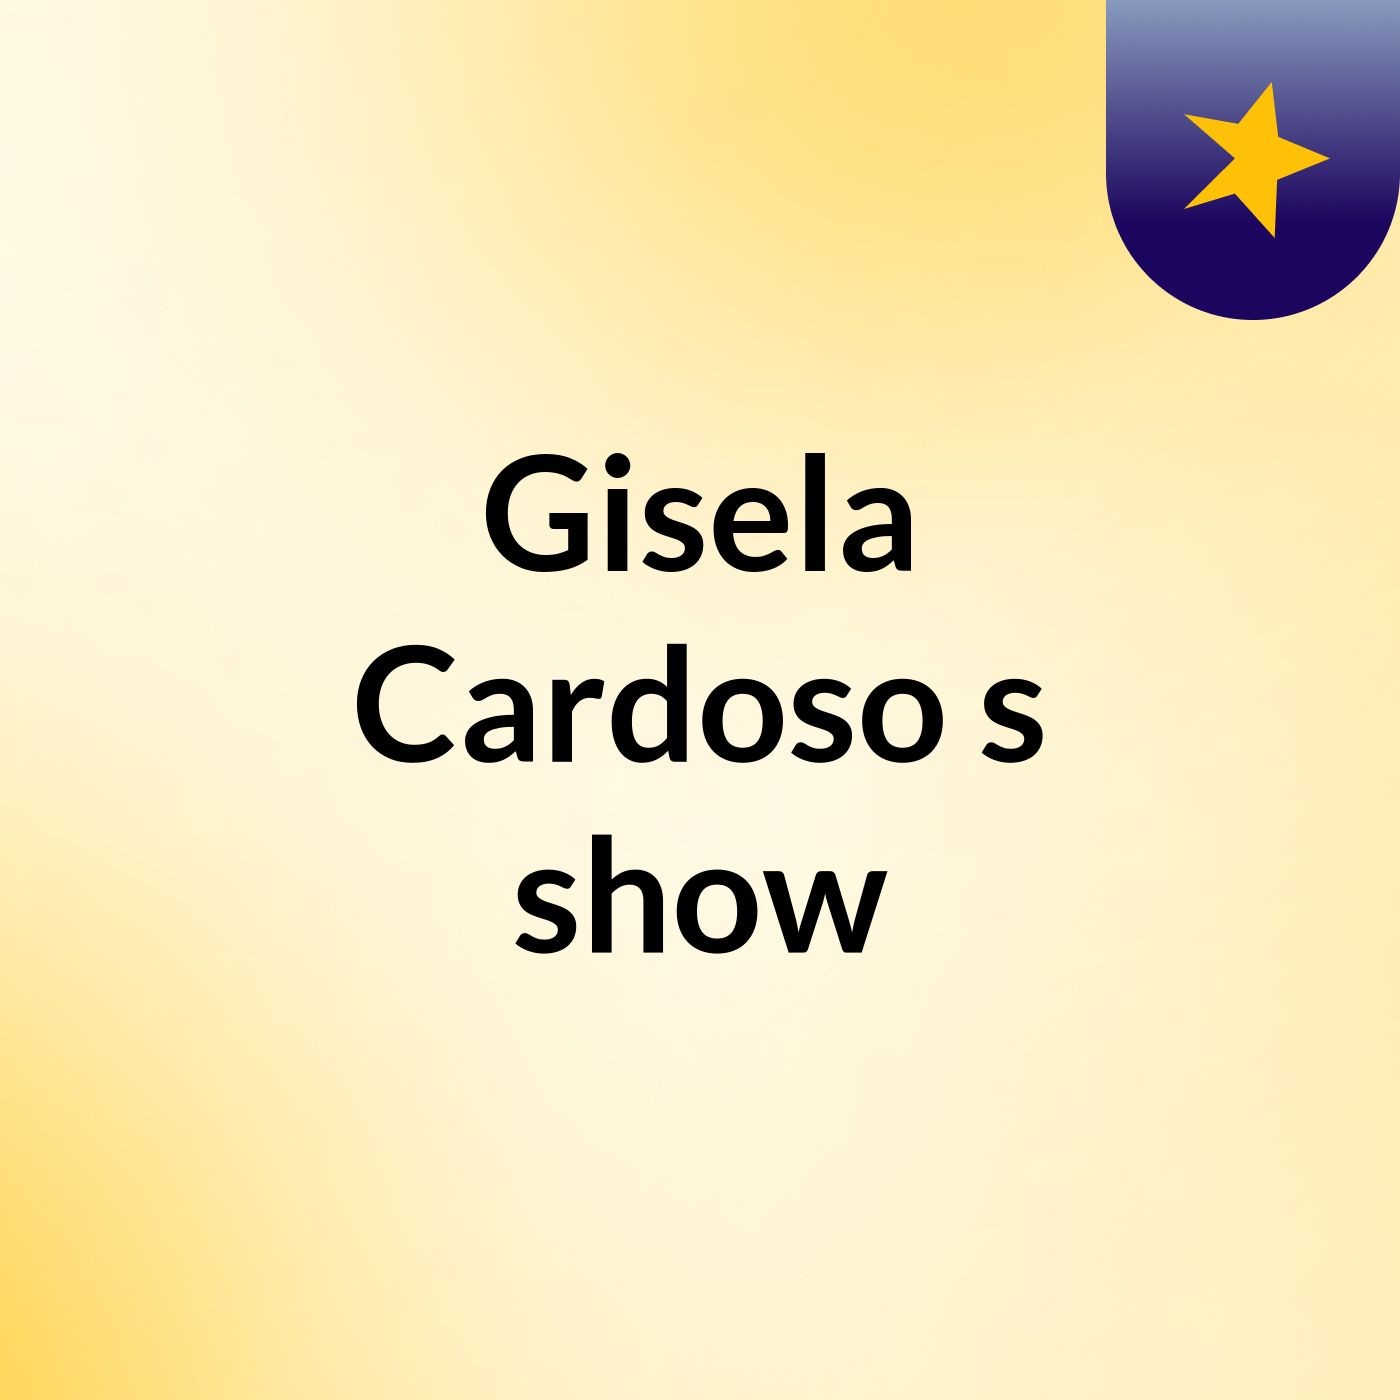 Gisela Cardoso's show